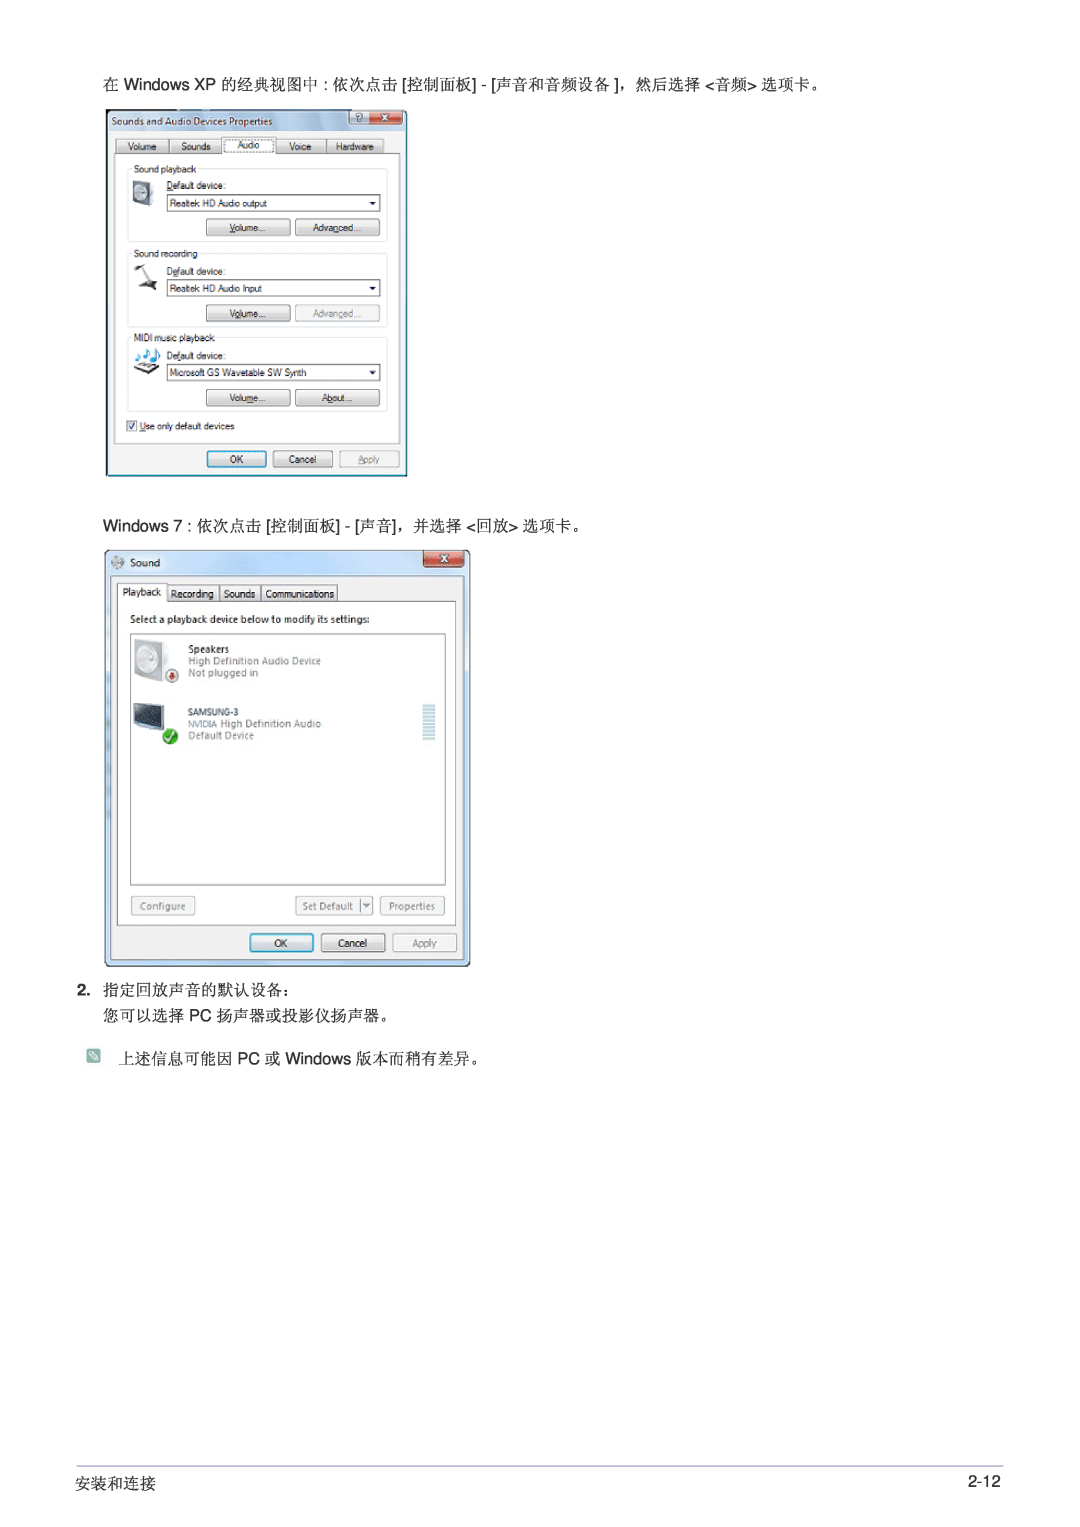 Samsung SP1005XWX/EN 在 Windows XP 的经典视图中 依次点击 控制面板 - 声音和音频设备 ，然后选择 音频 选项卡。, Windows 7 依次点击 控制面板 - 声音，并选择 回放 选项卡。, 安装和连接 